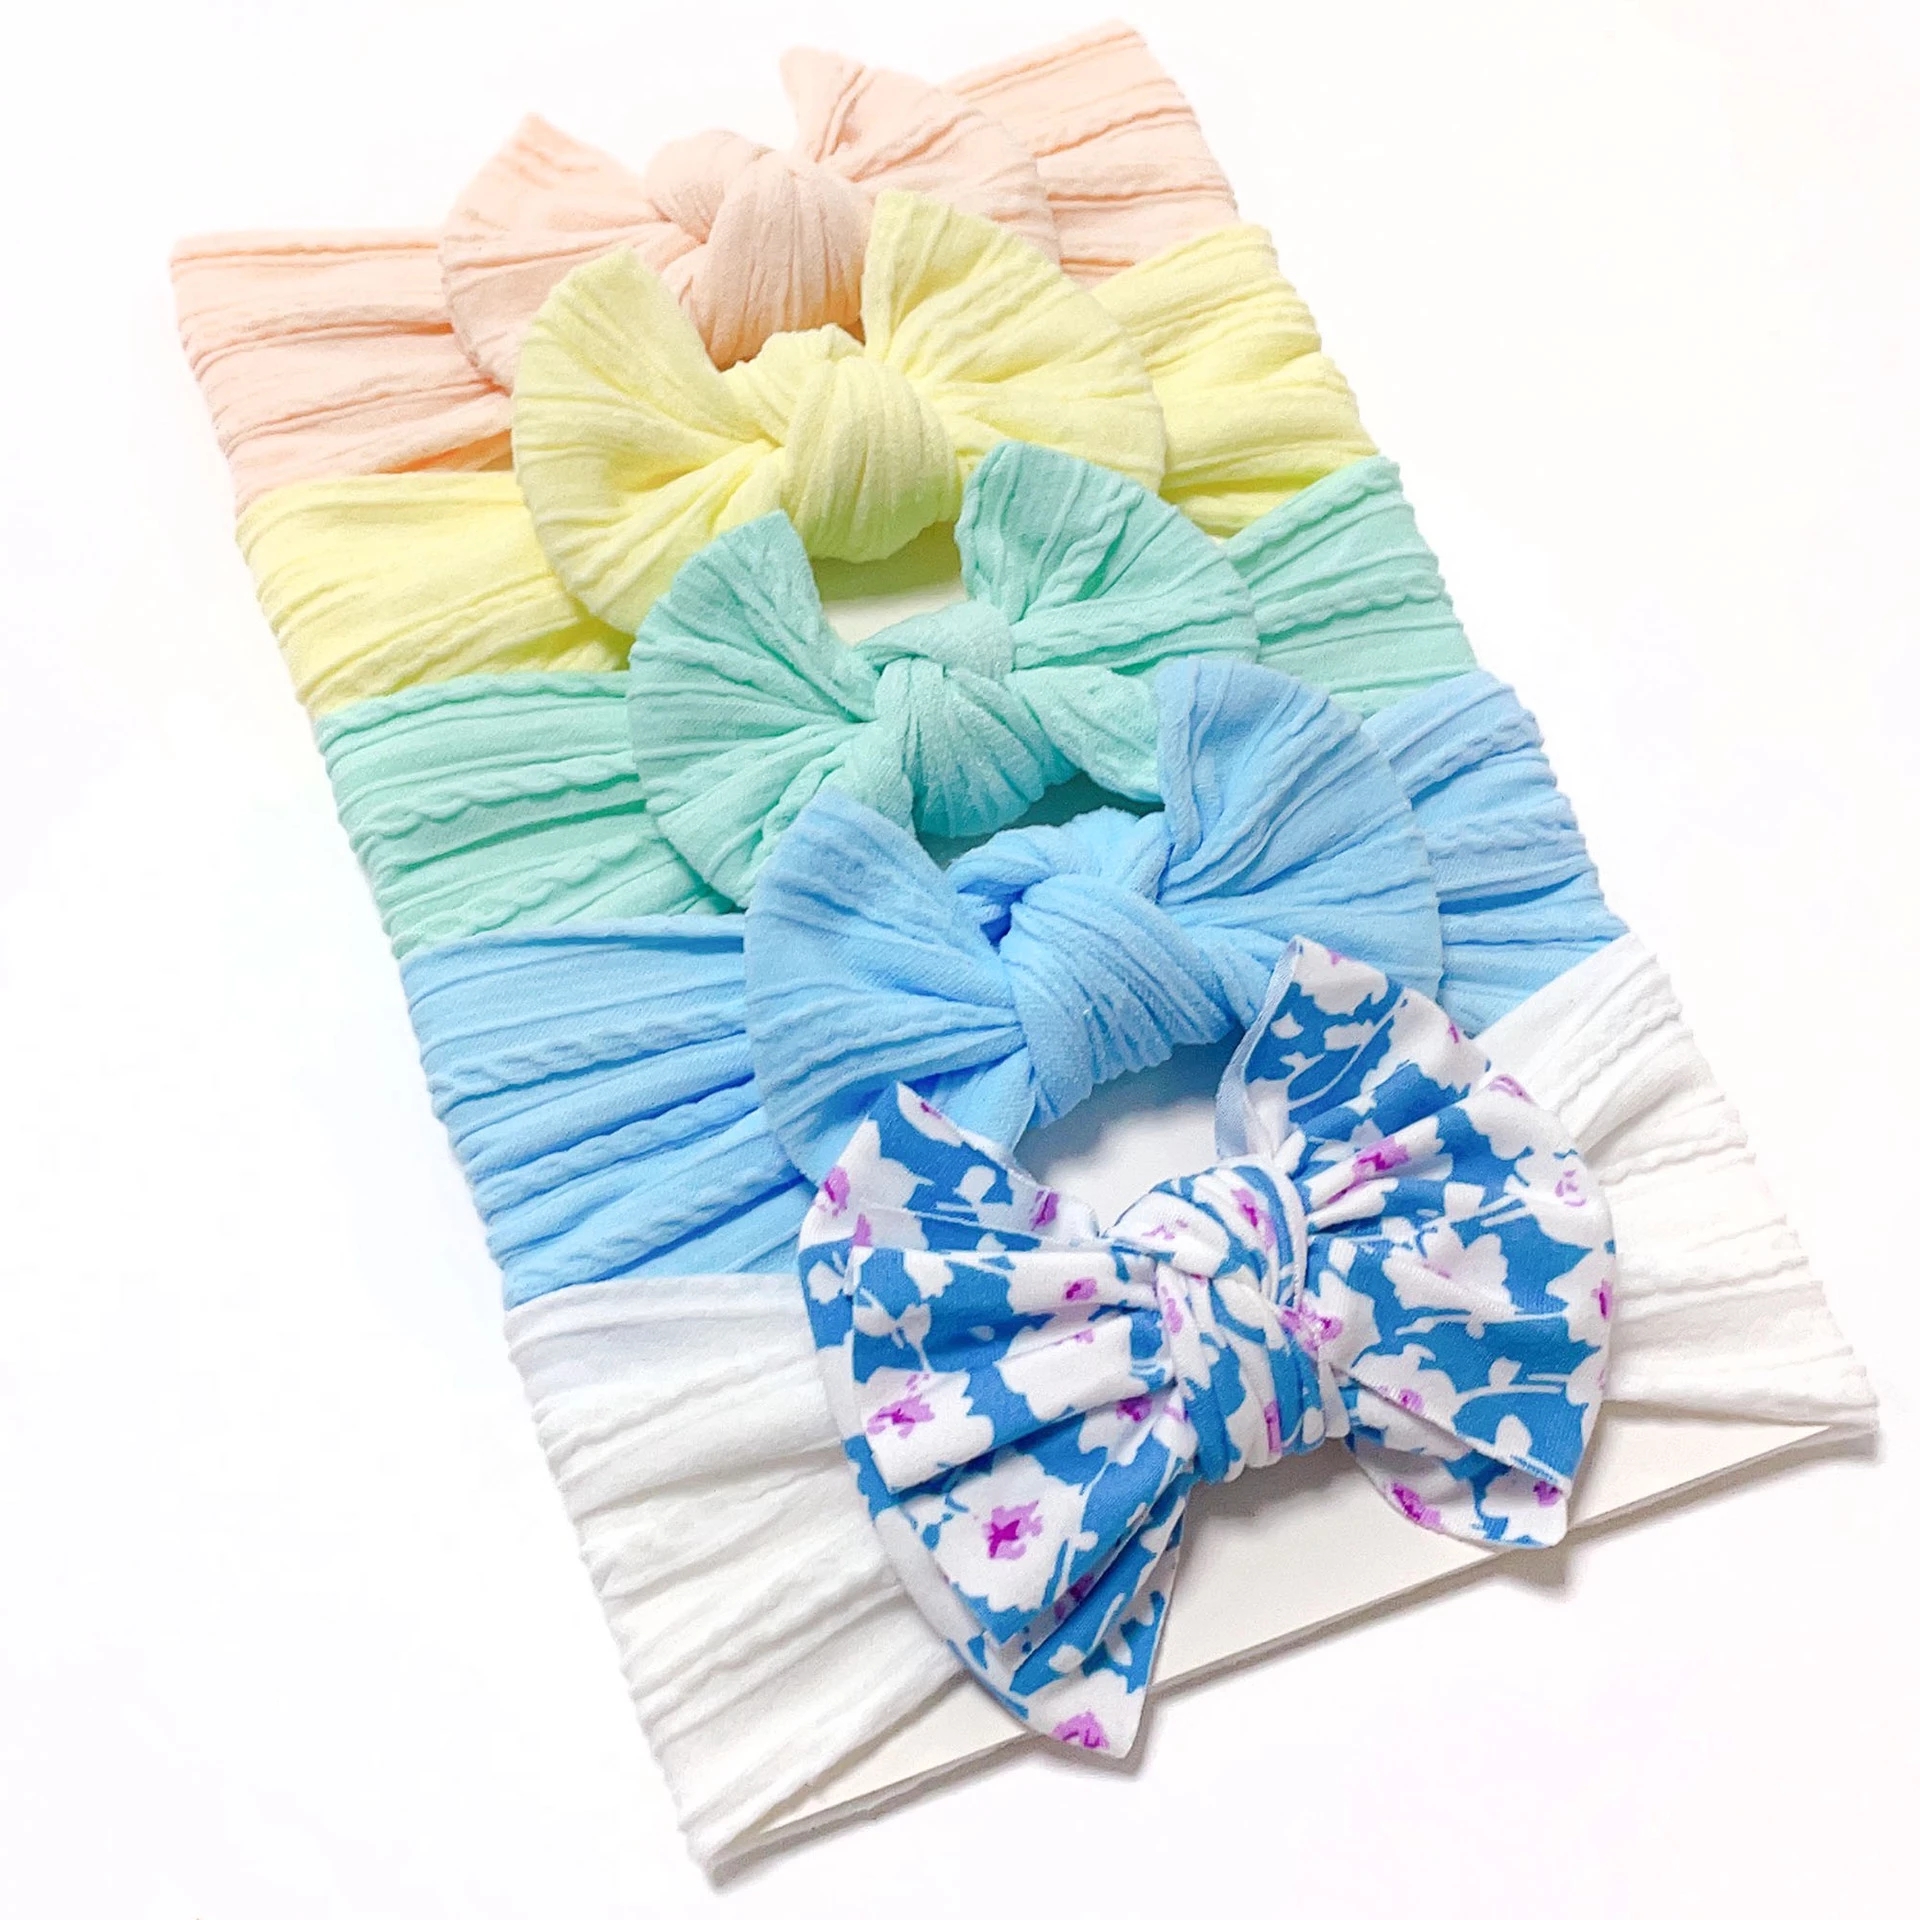 Newborn Nylon Bowknot Headband Baby Girls Floral Printed Elastic Soft Turban Cute Little Princess Bow Hair Accessories